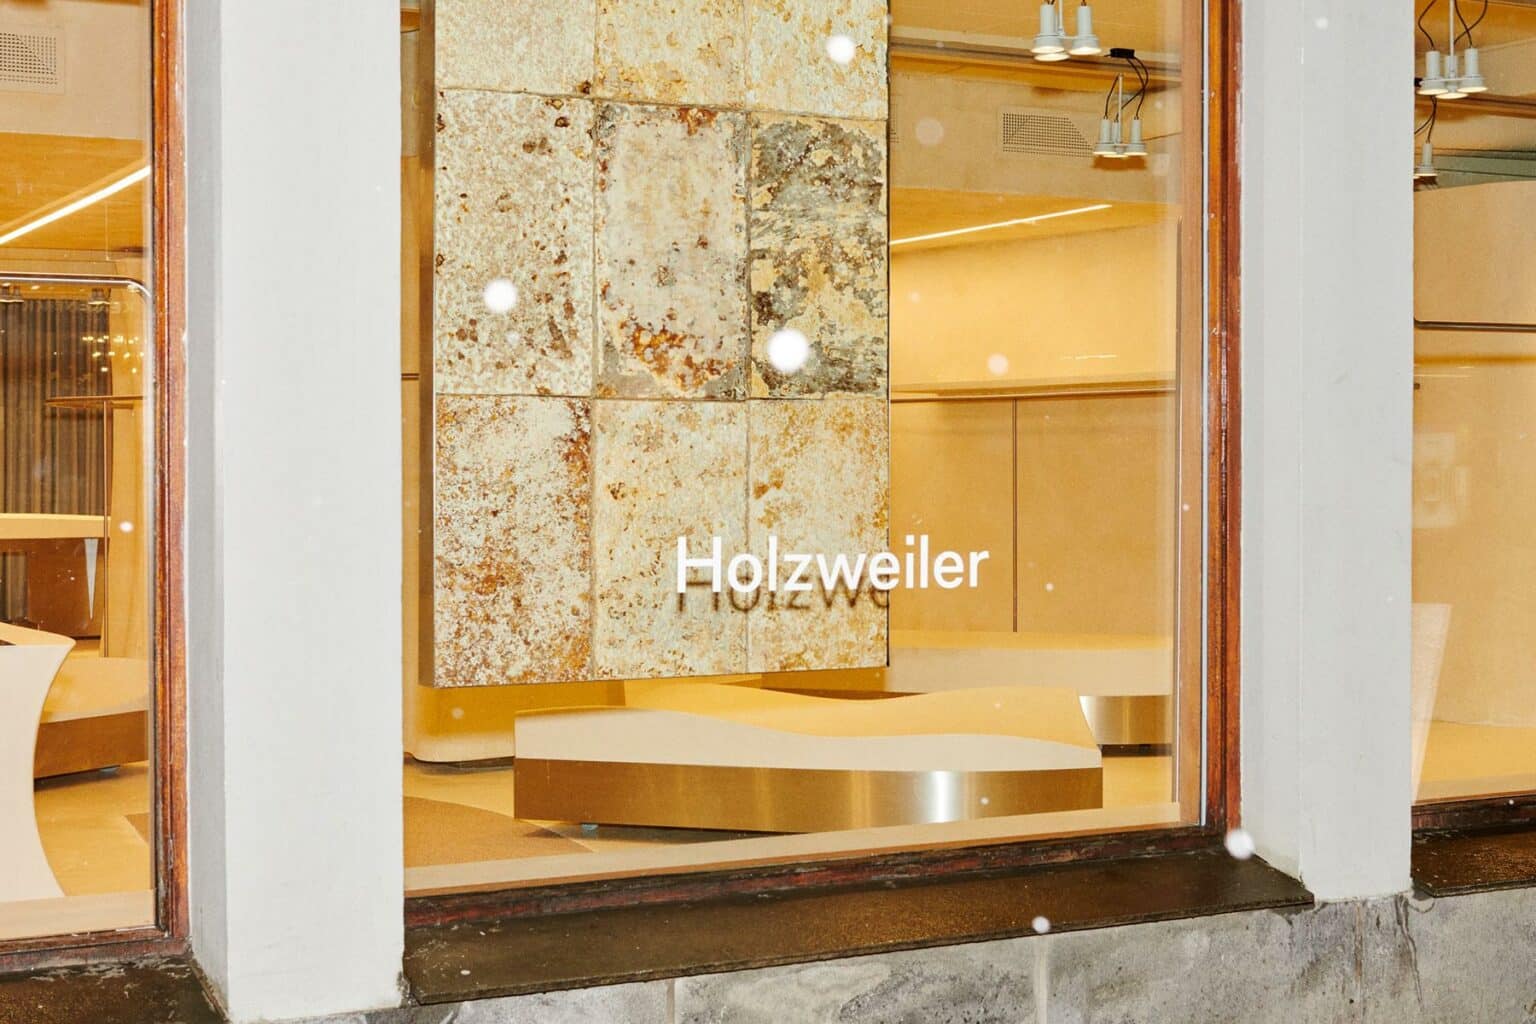 pluss2_interior-holzweiler-ilewKP9g